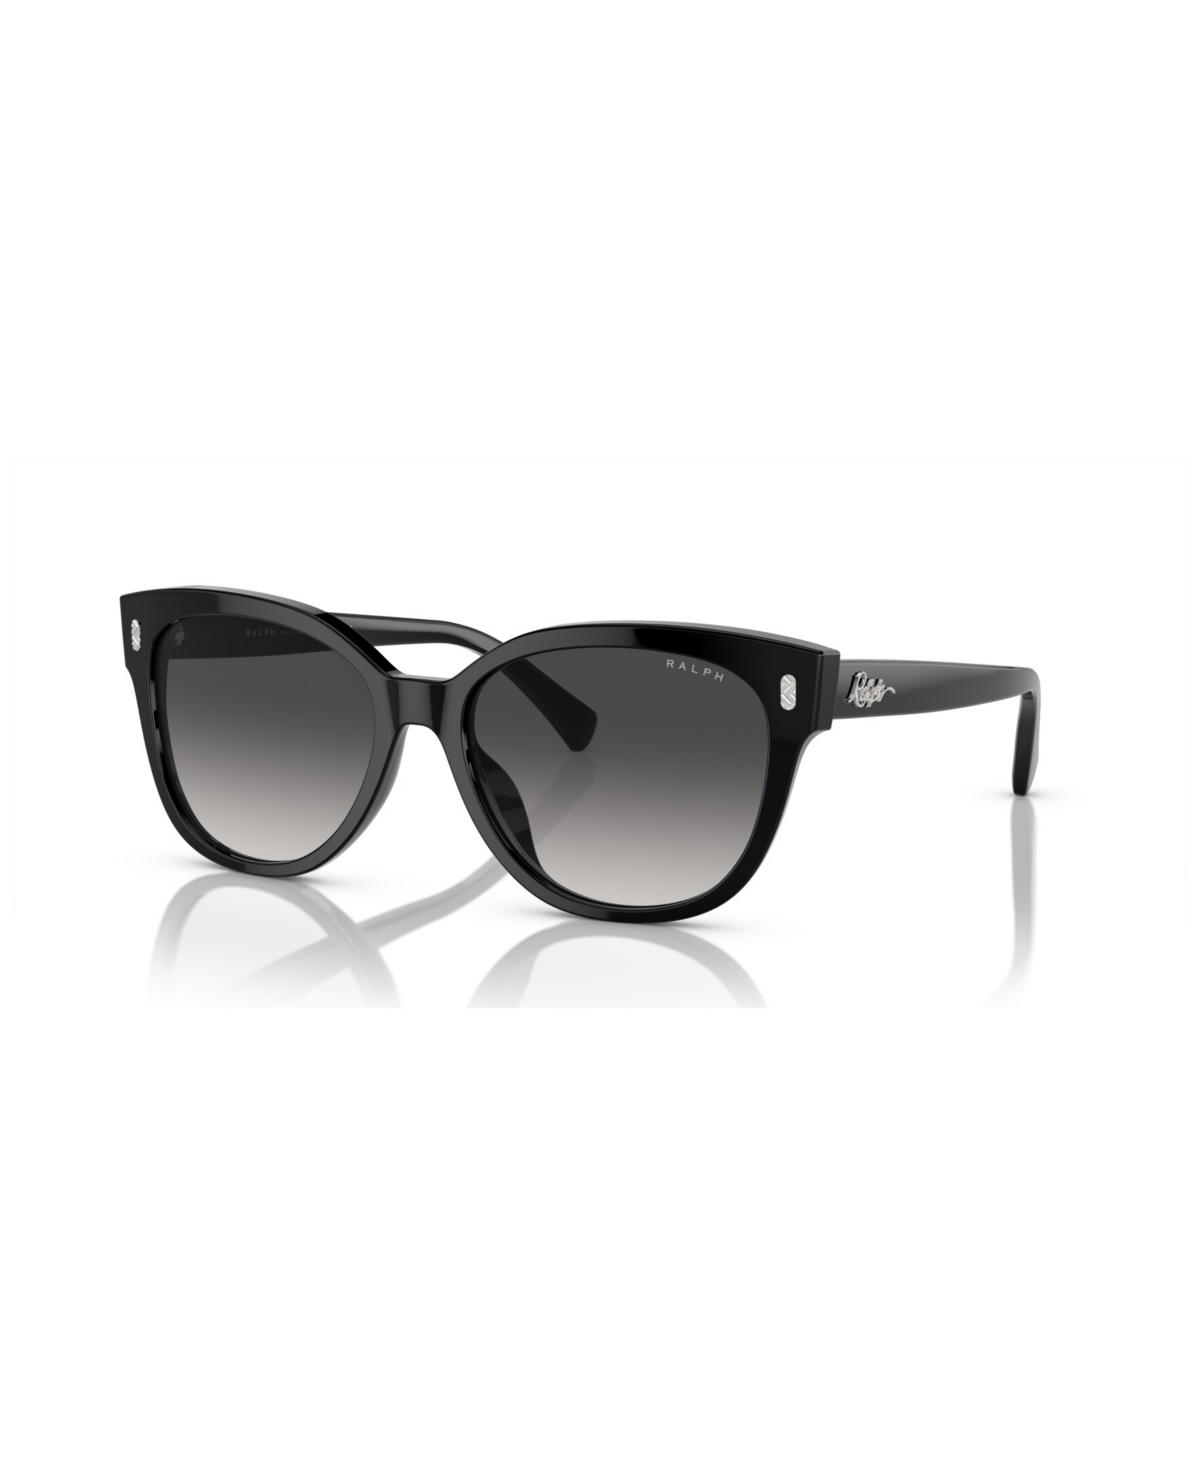 Women's Sunglasses, Gradient RA5305U - Shiny Black